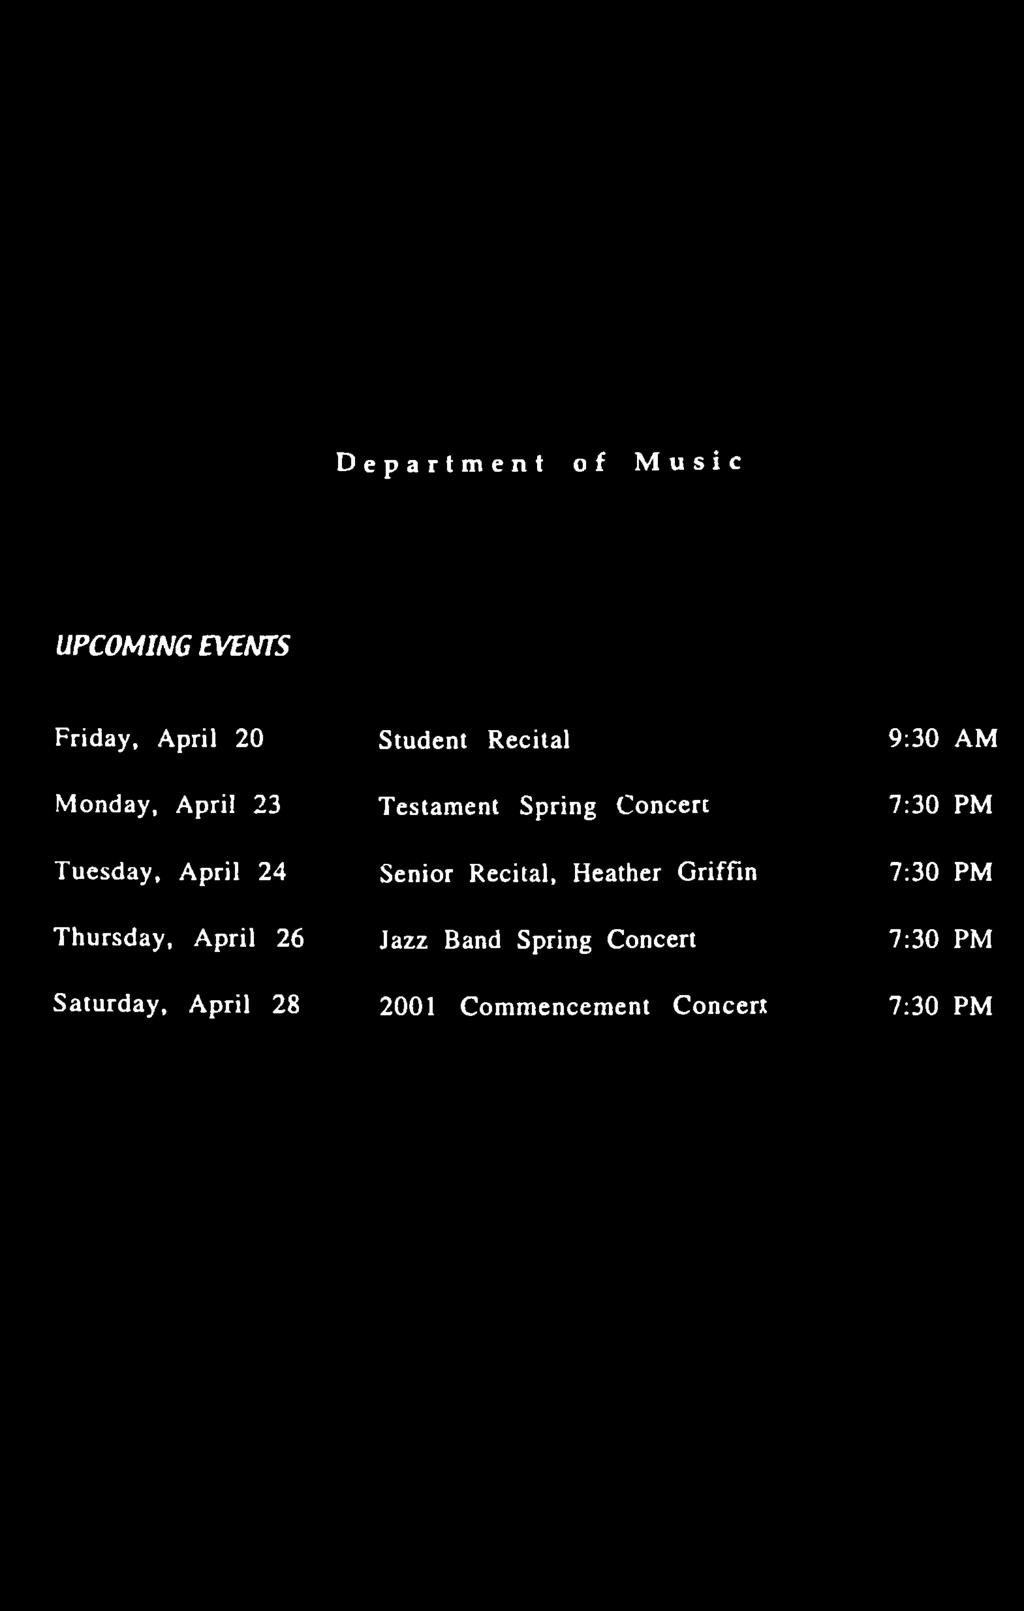 Thursday, April 26 Jazz Band Spring Concert 7:30